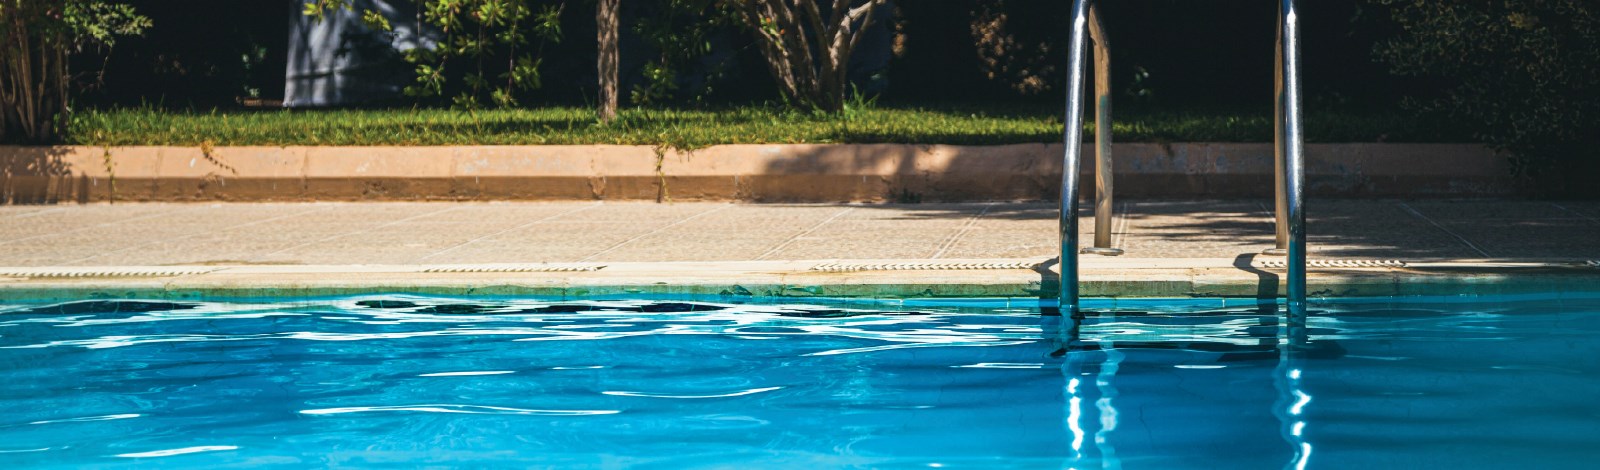 Swimming pool image